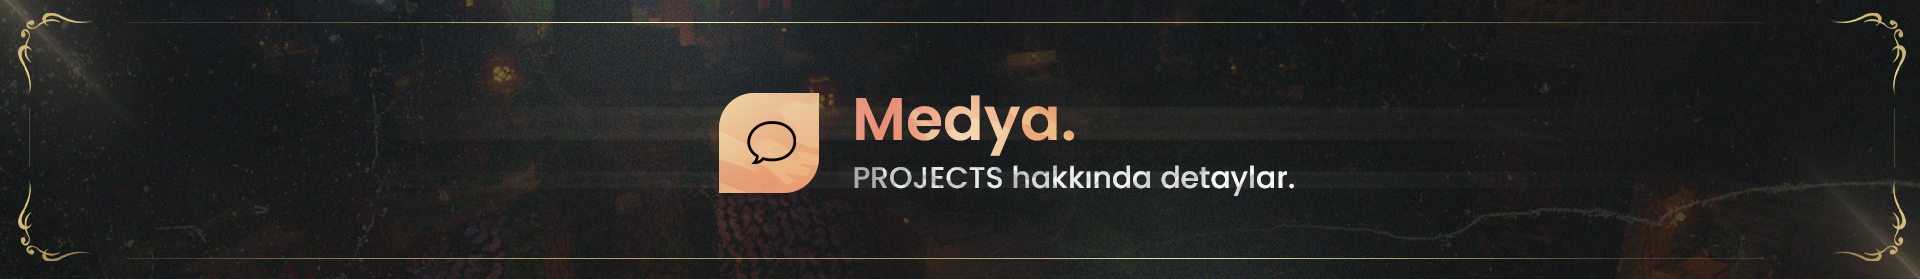 Medya.png